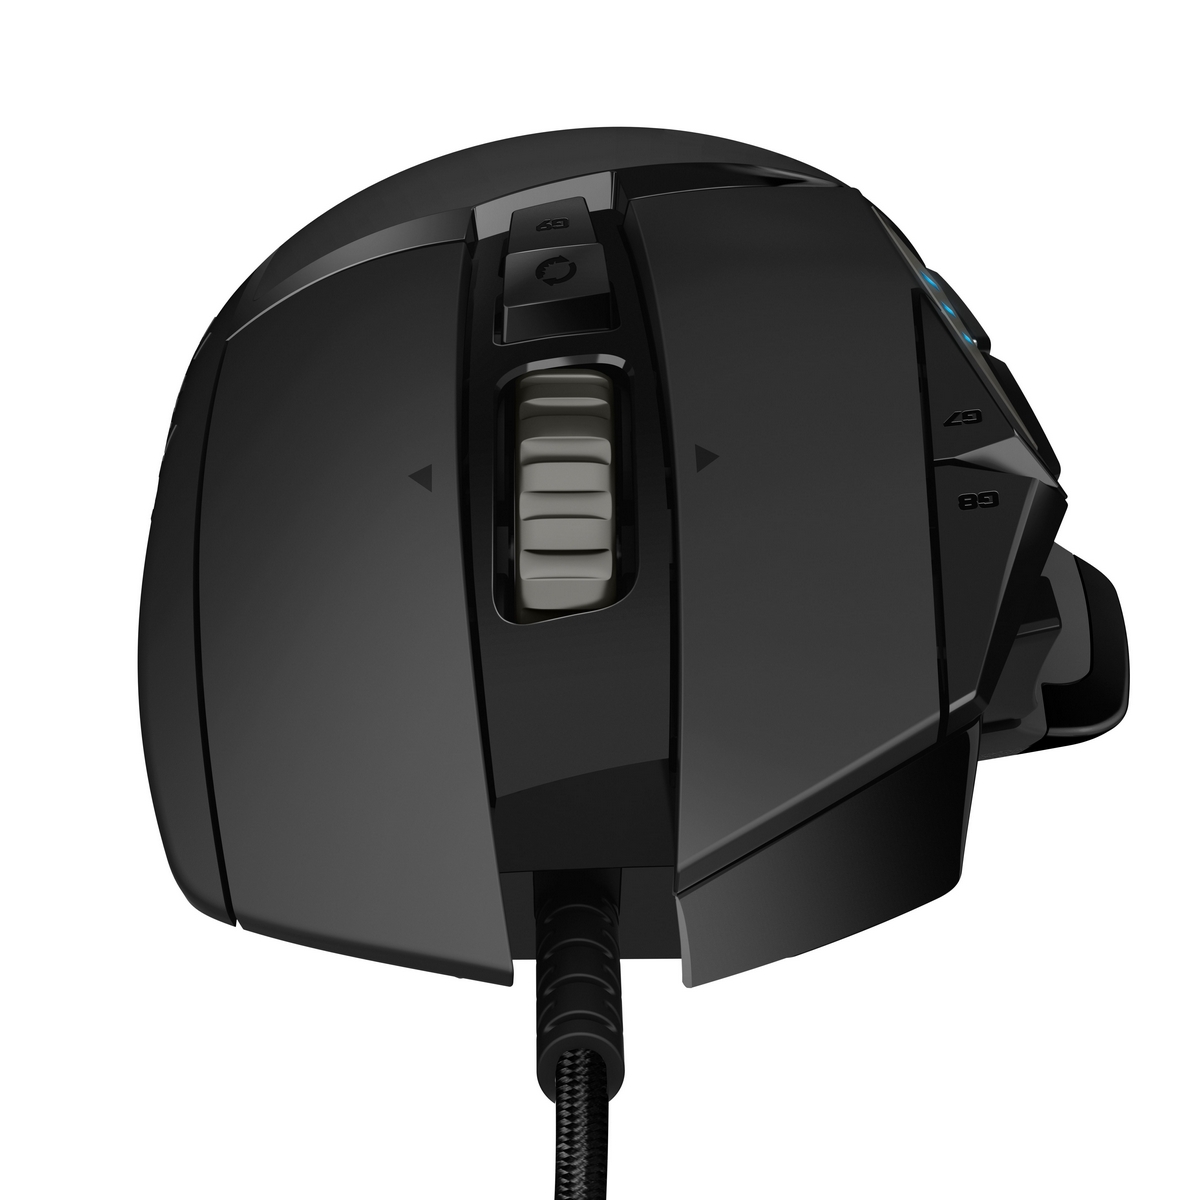 Logitech G502 HERO High Performance Gaming Mouse (910-005471)